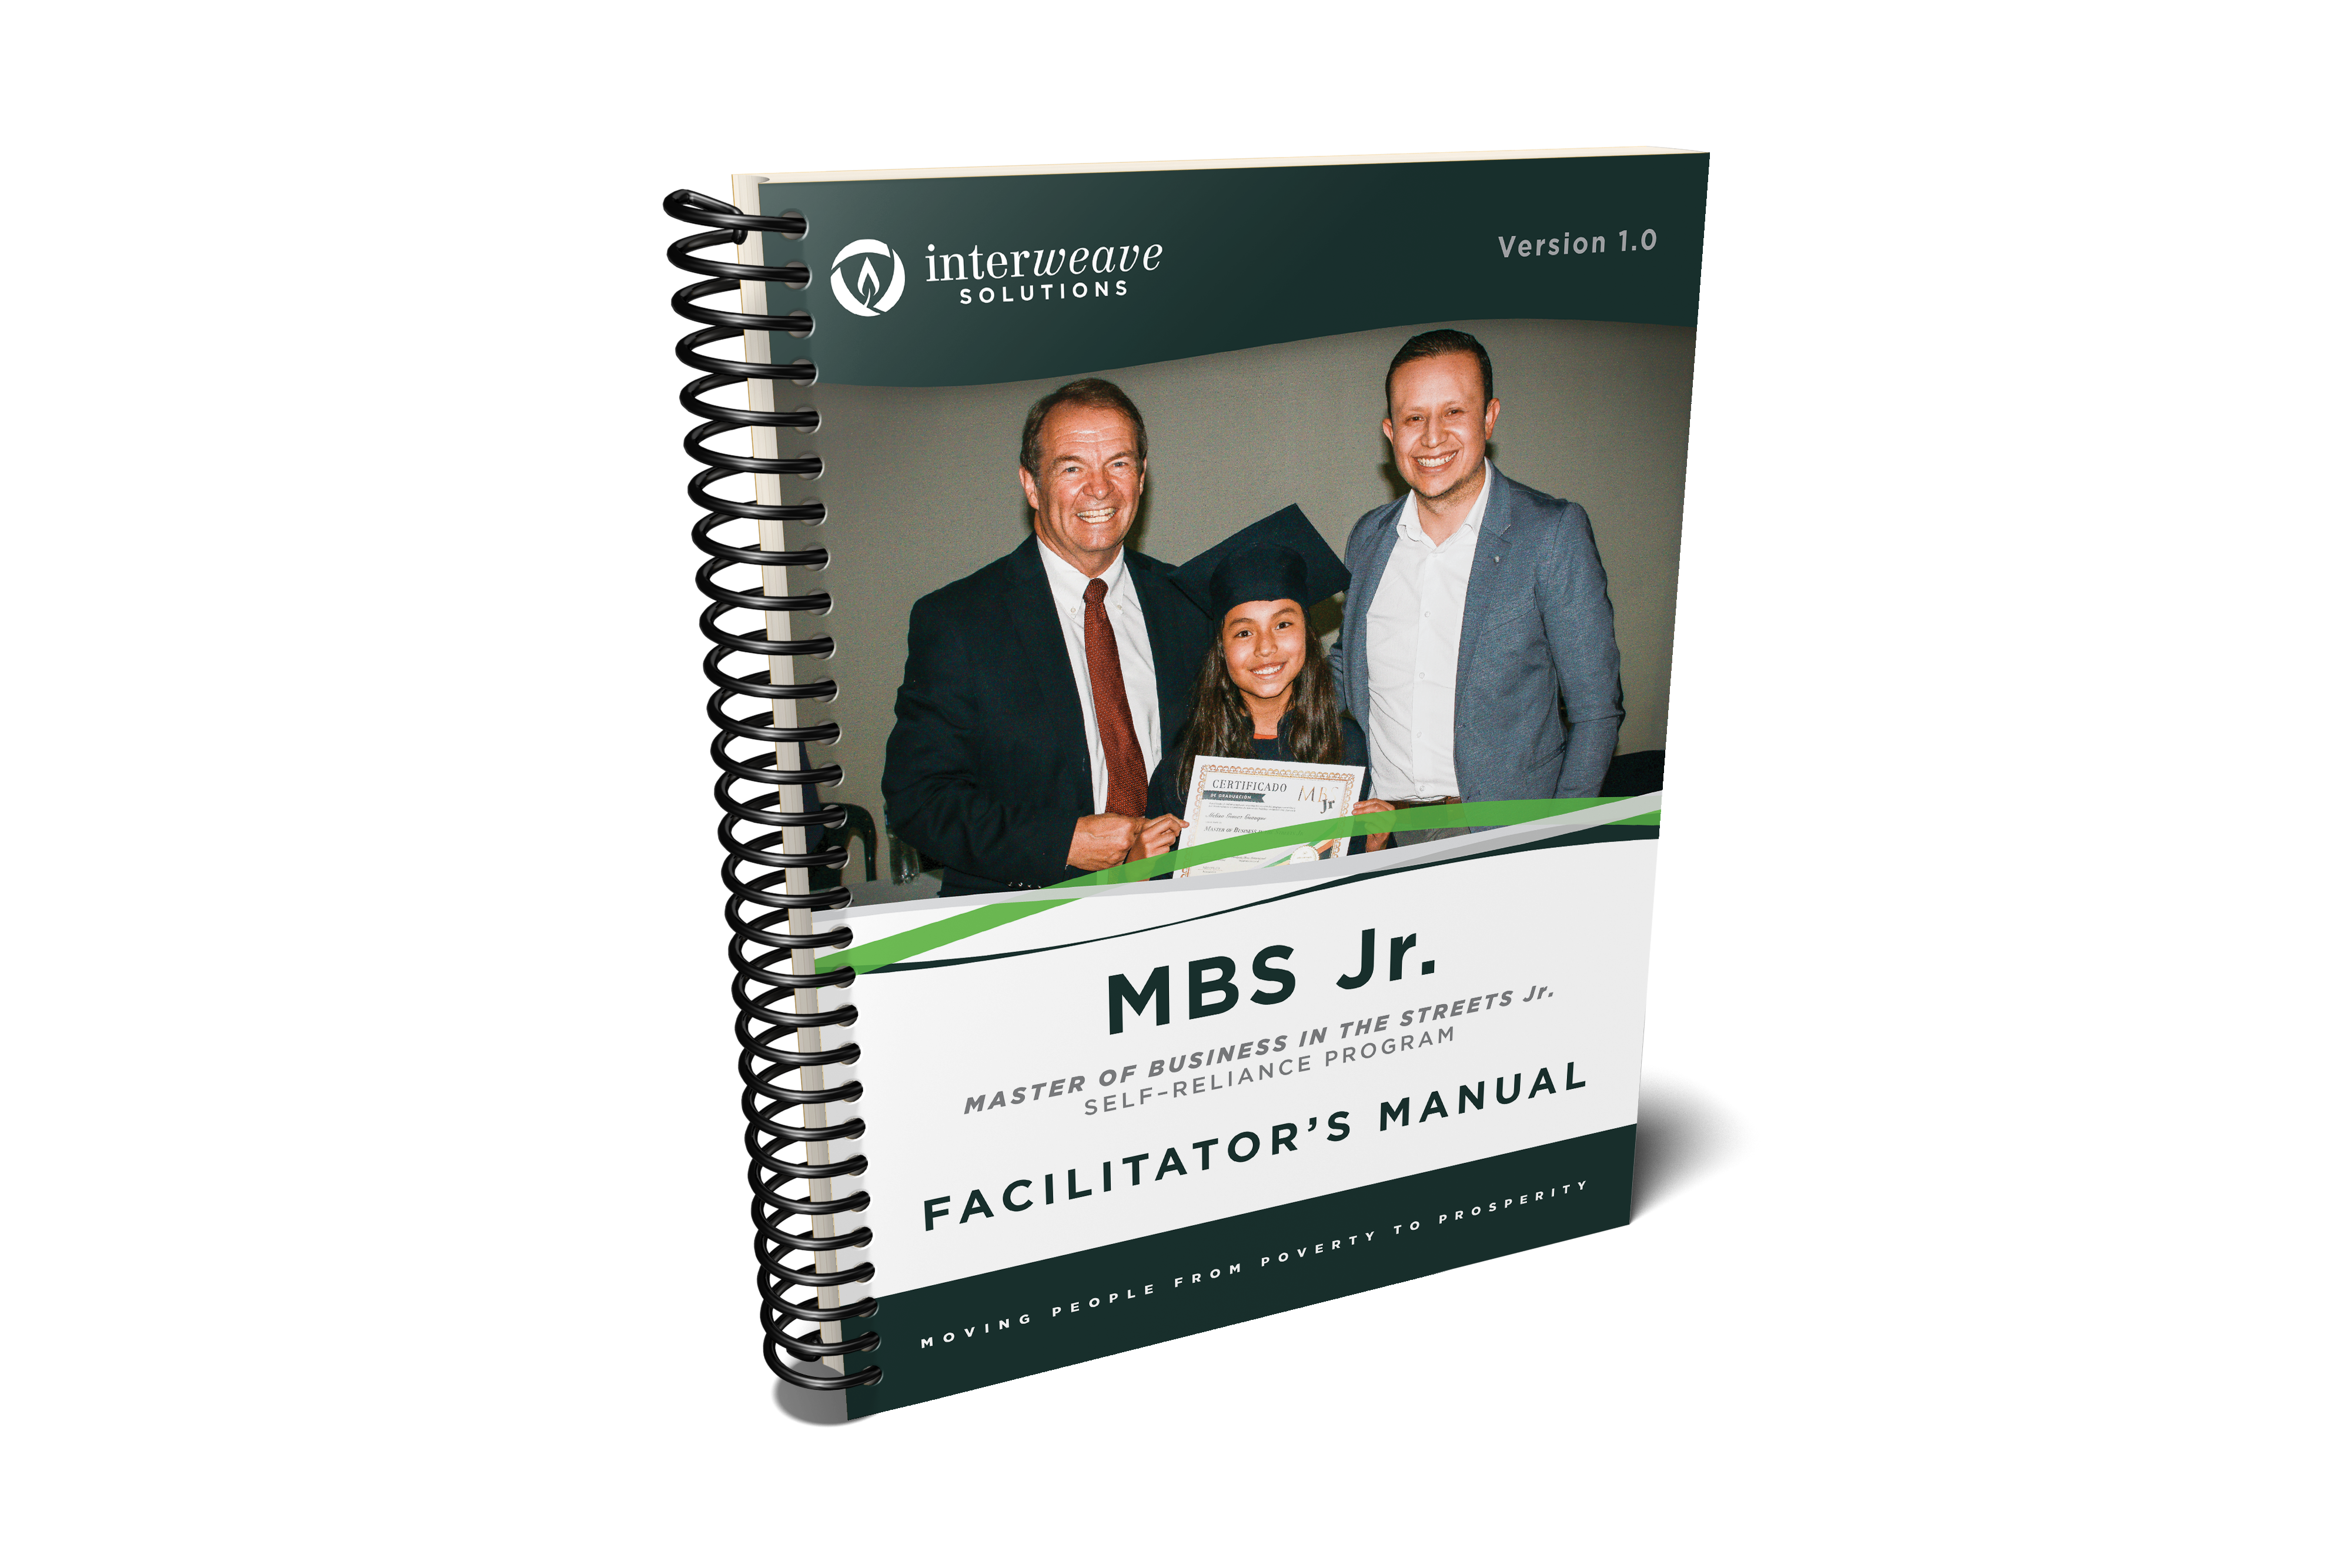 To download the MBS Jr. Facilitator's Manual, please click here: MBS Jr. Facilitator's Manual